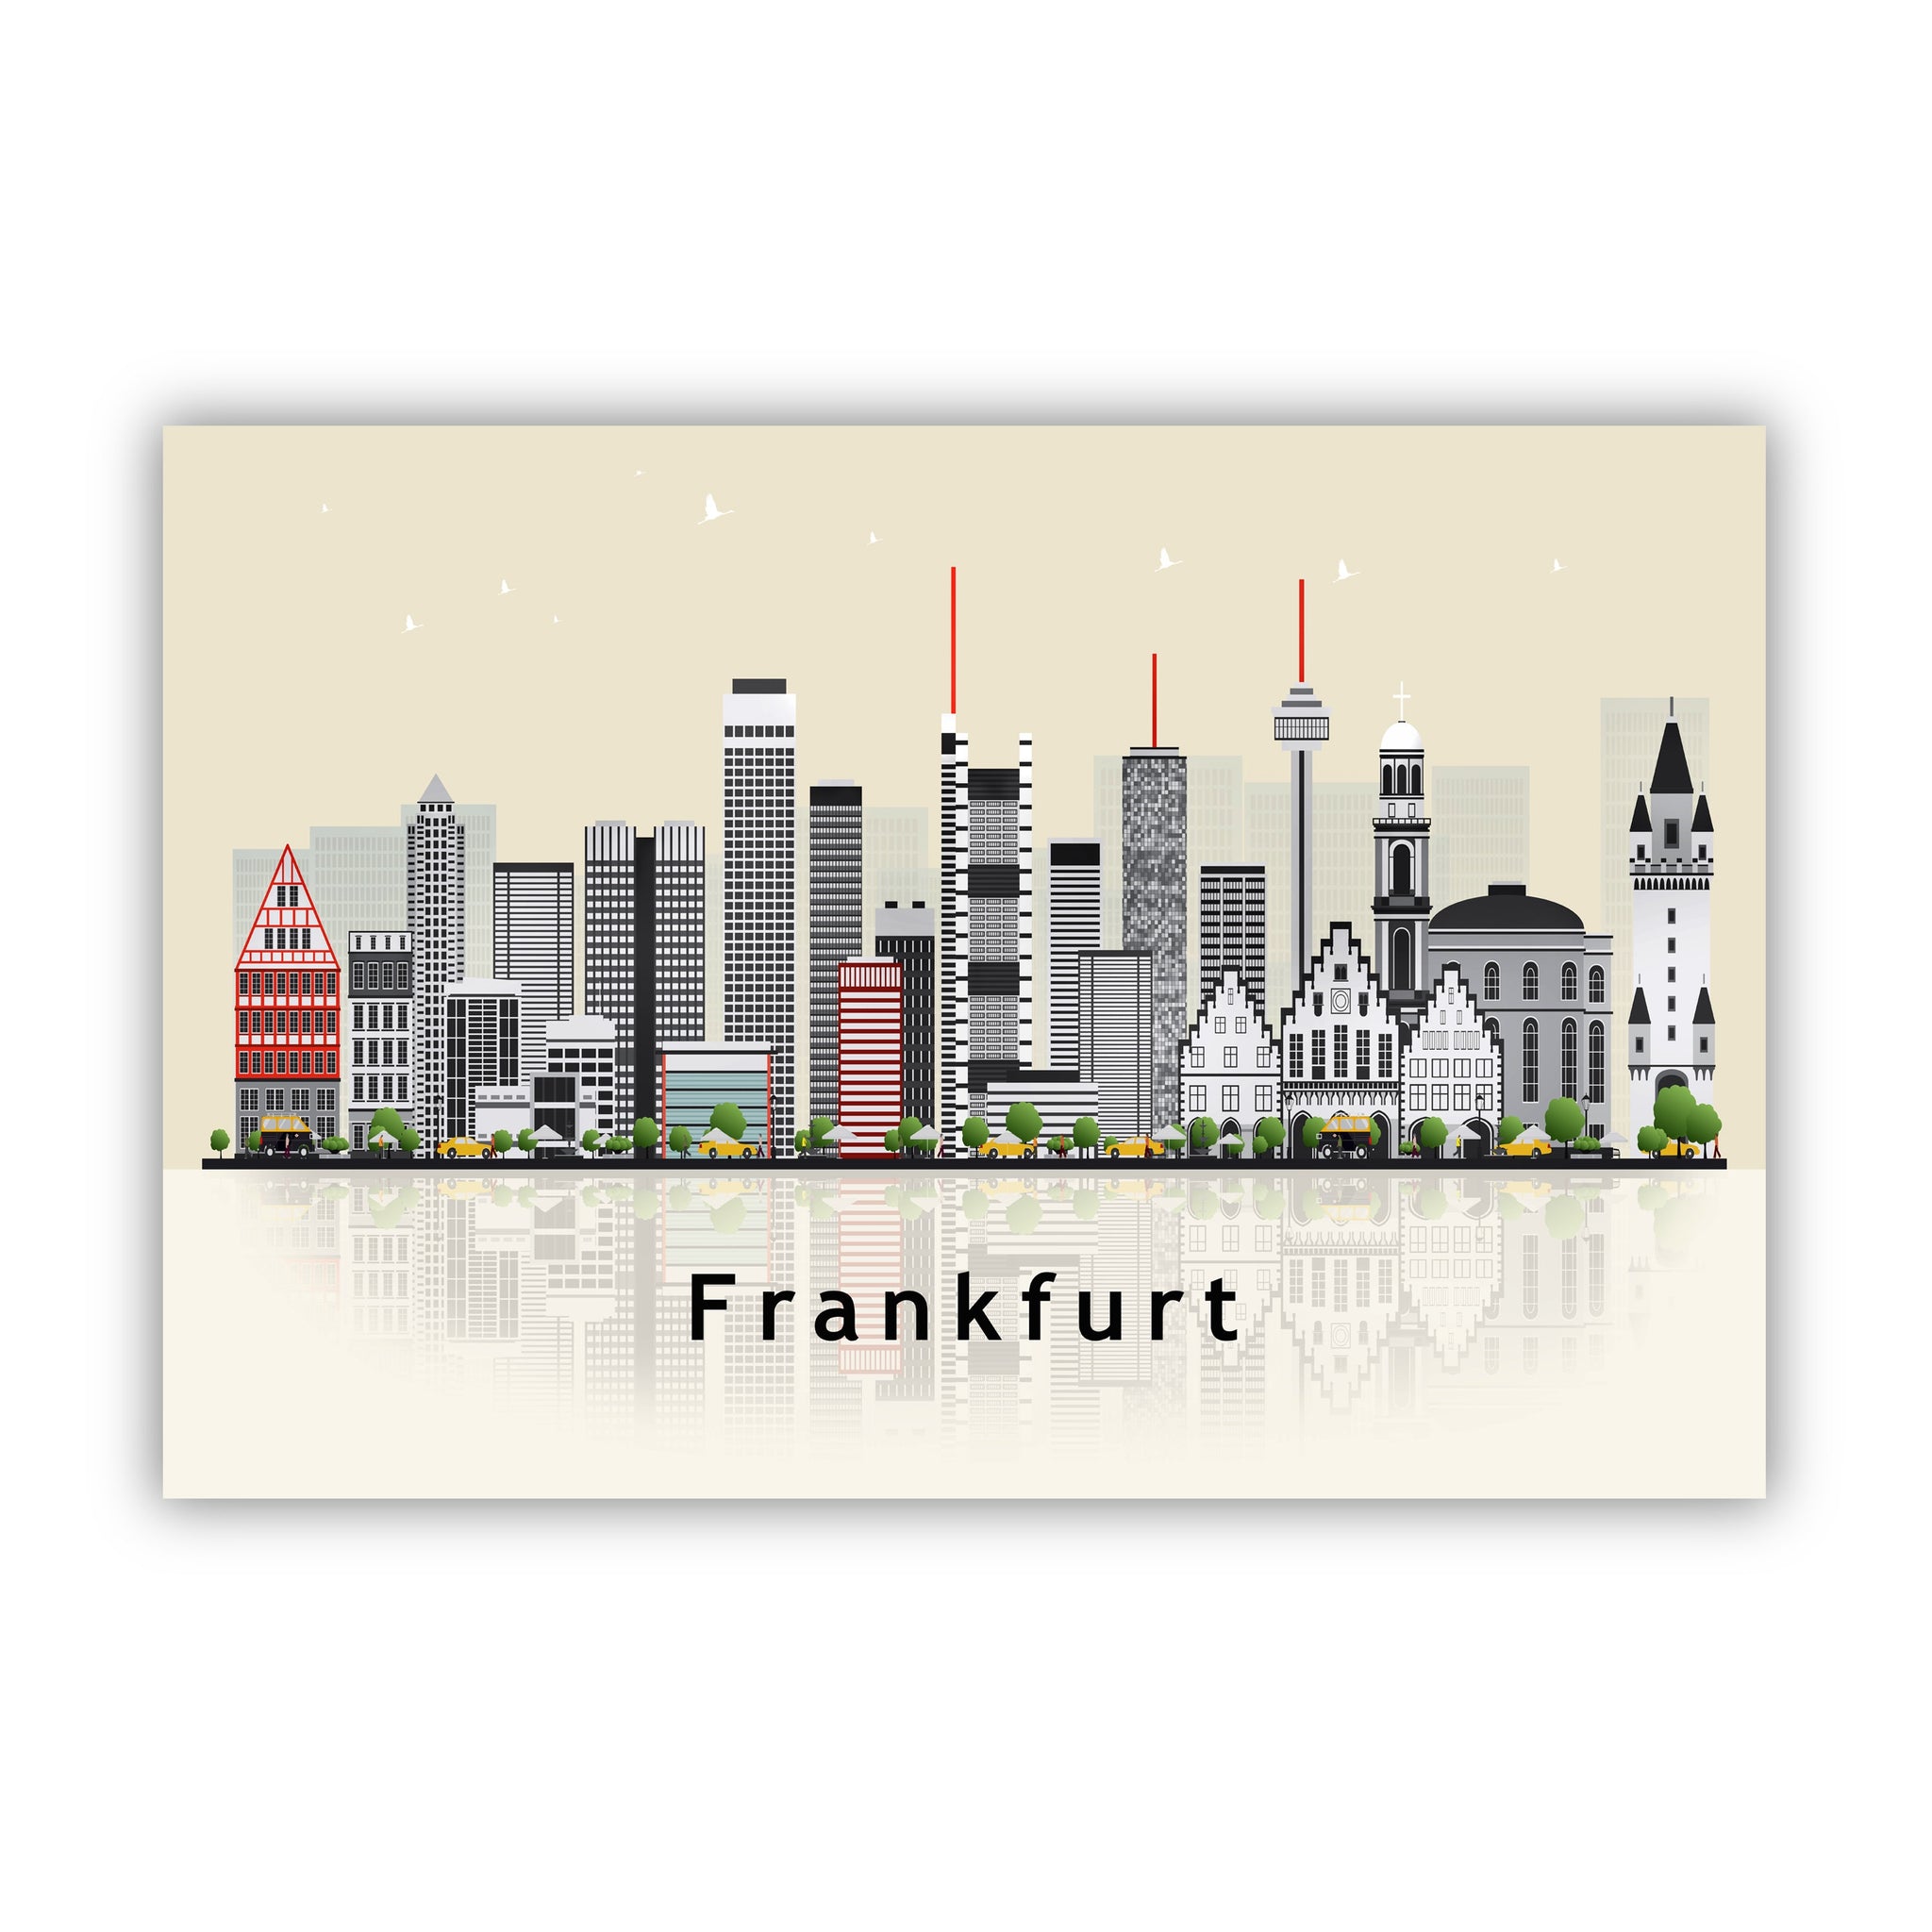 FRANKFURT GERMANY Illustration skyline poster, Modern skyline cityscape poster print, Landmark map poster, Home wall art decoration